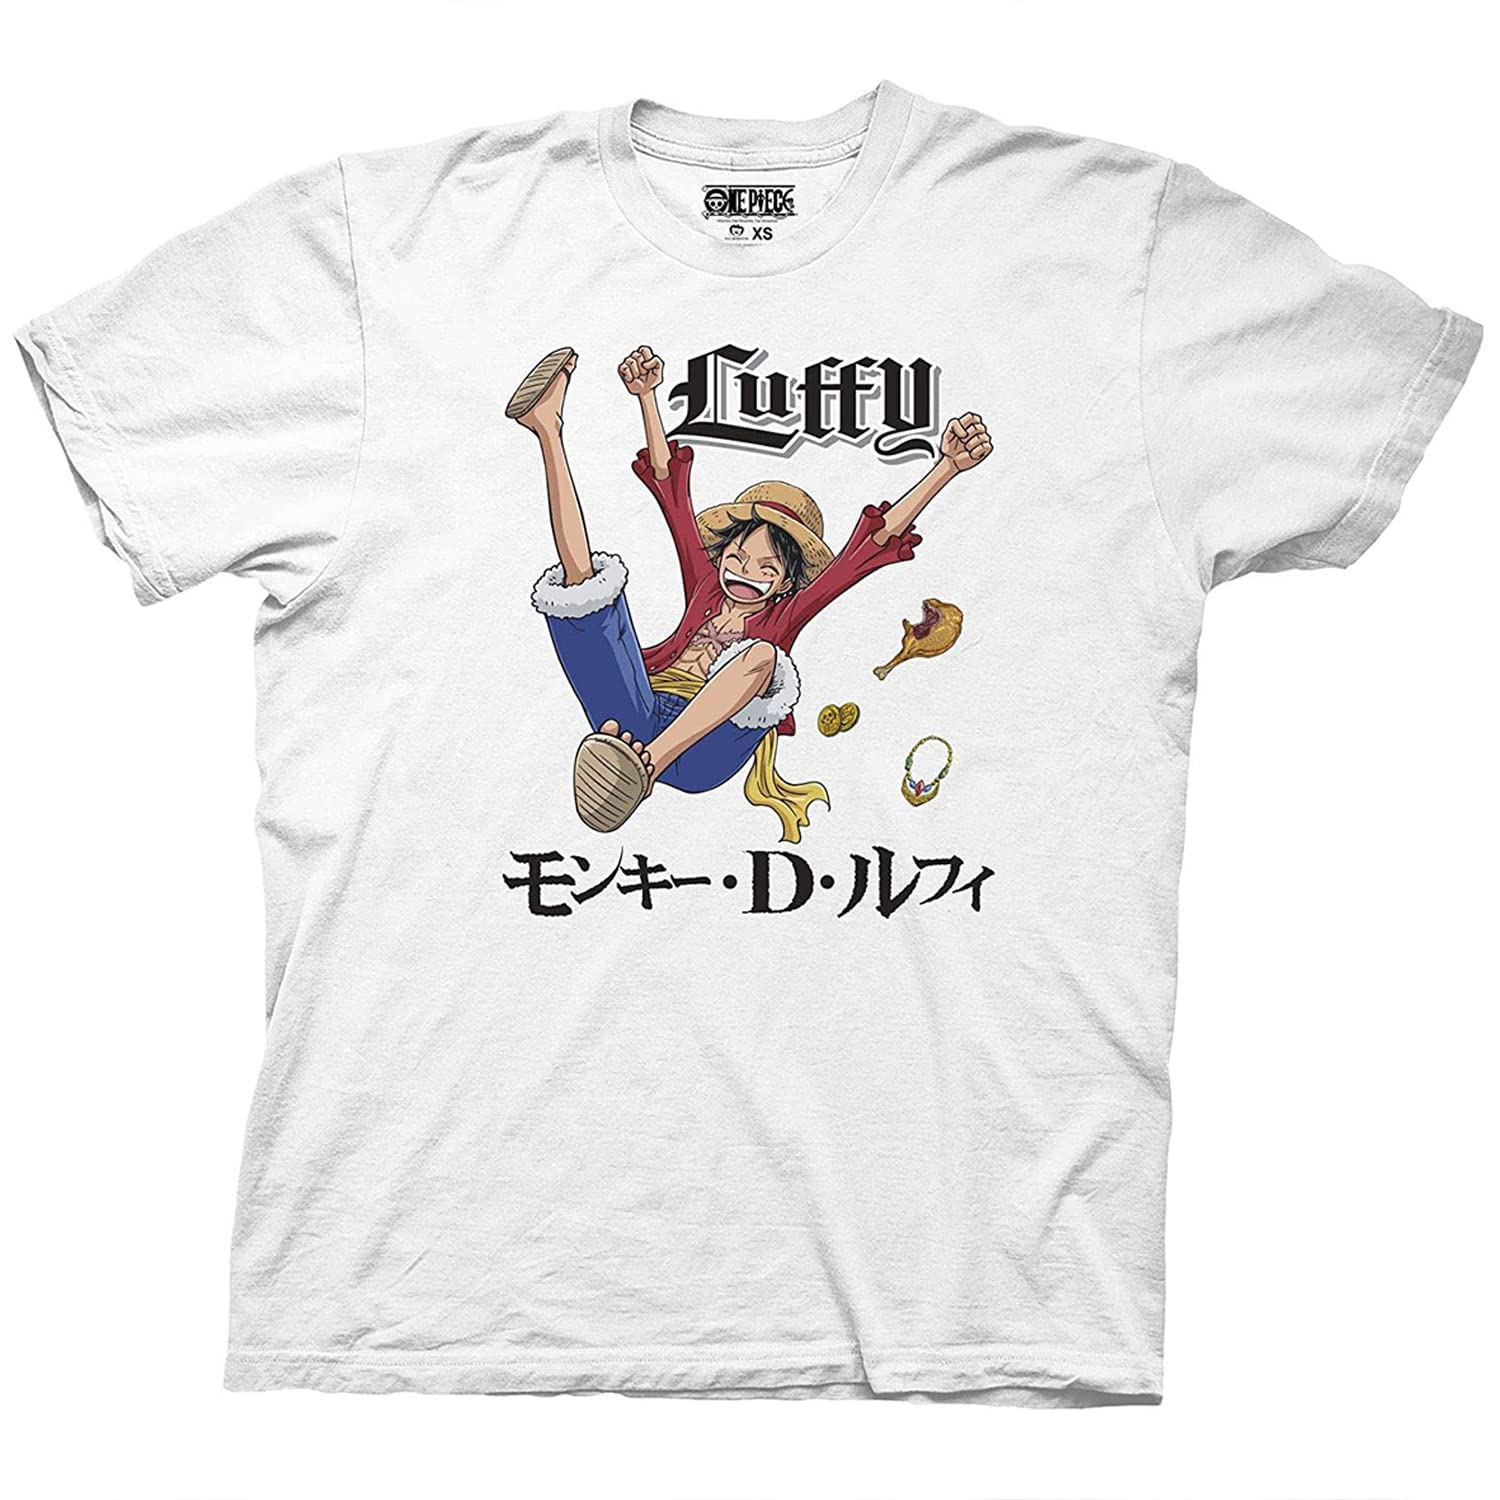 I Love Anime In Japanese T-shirt, Anime T-shirts